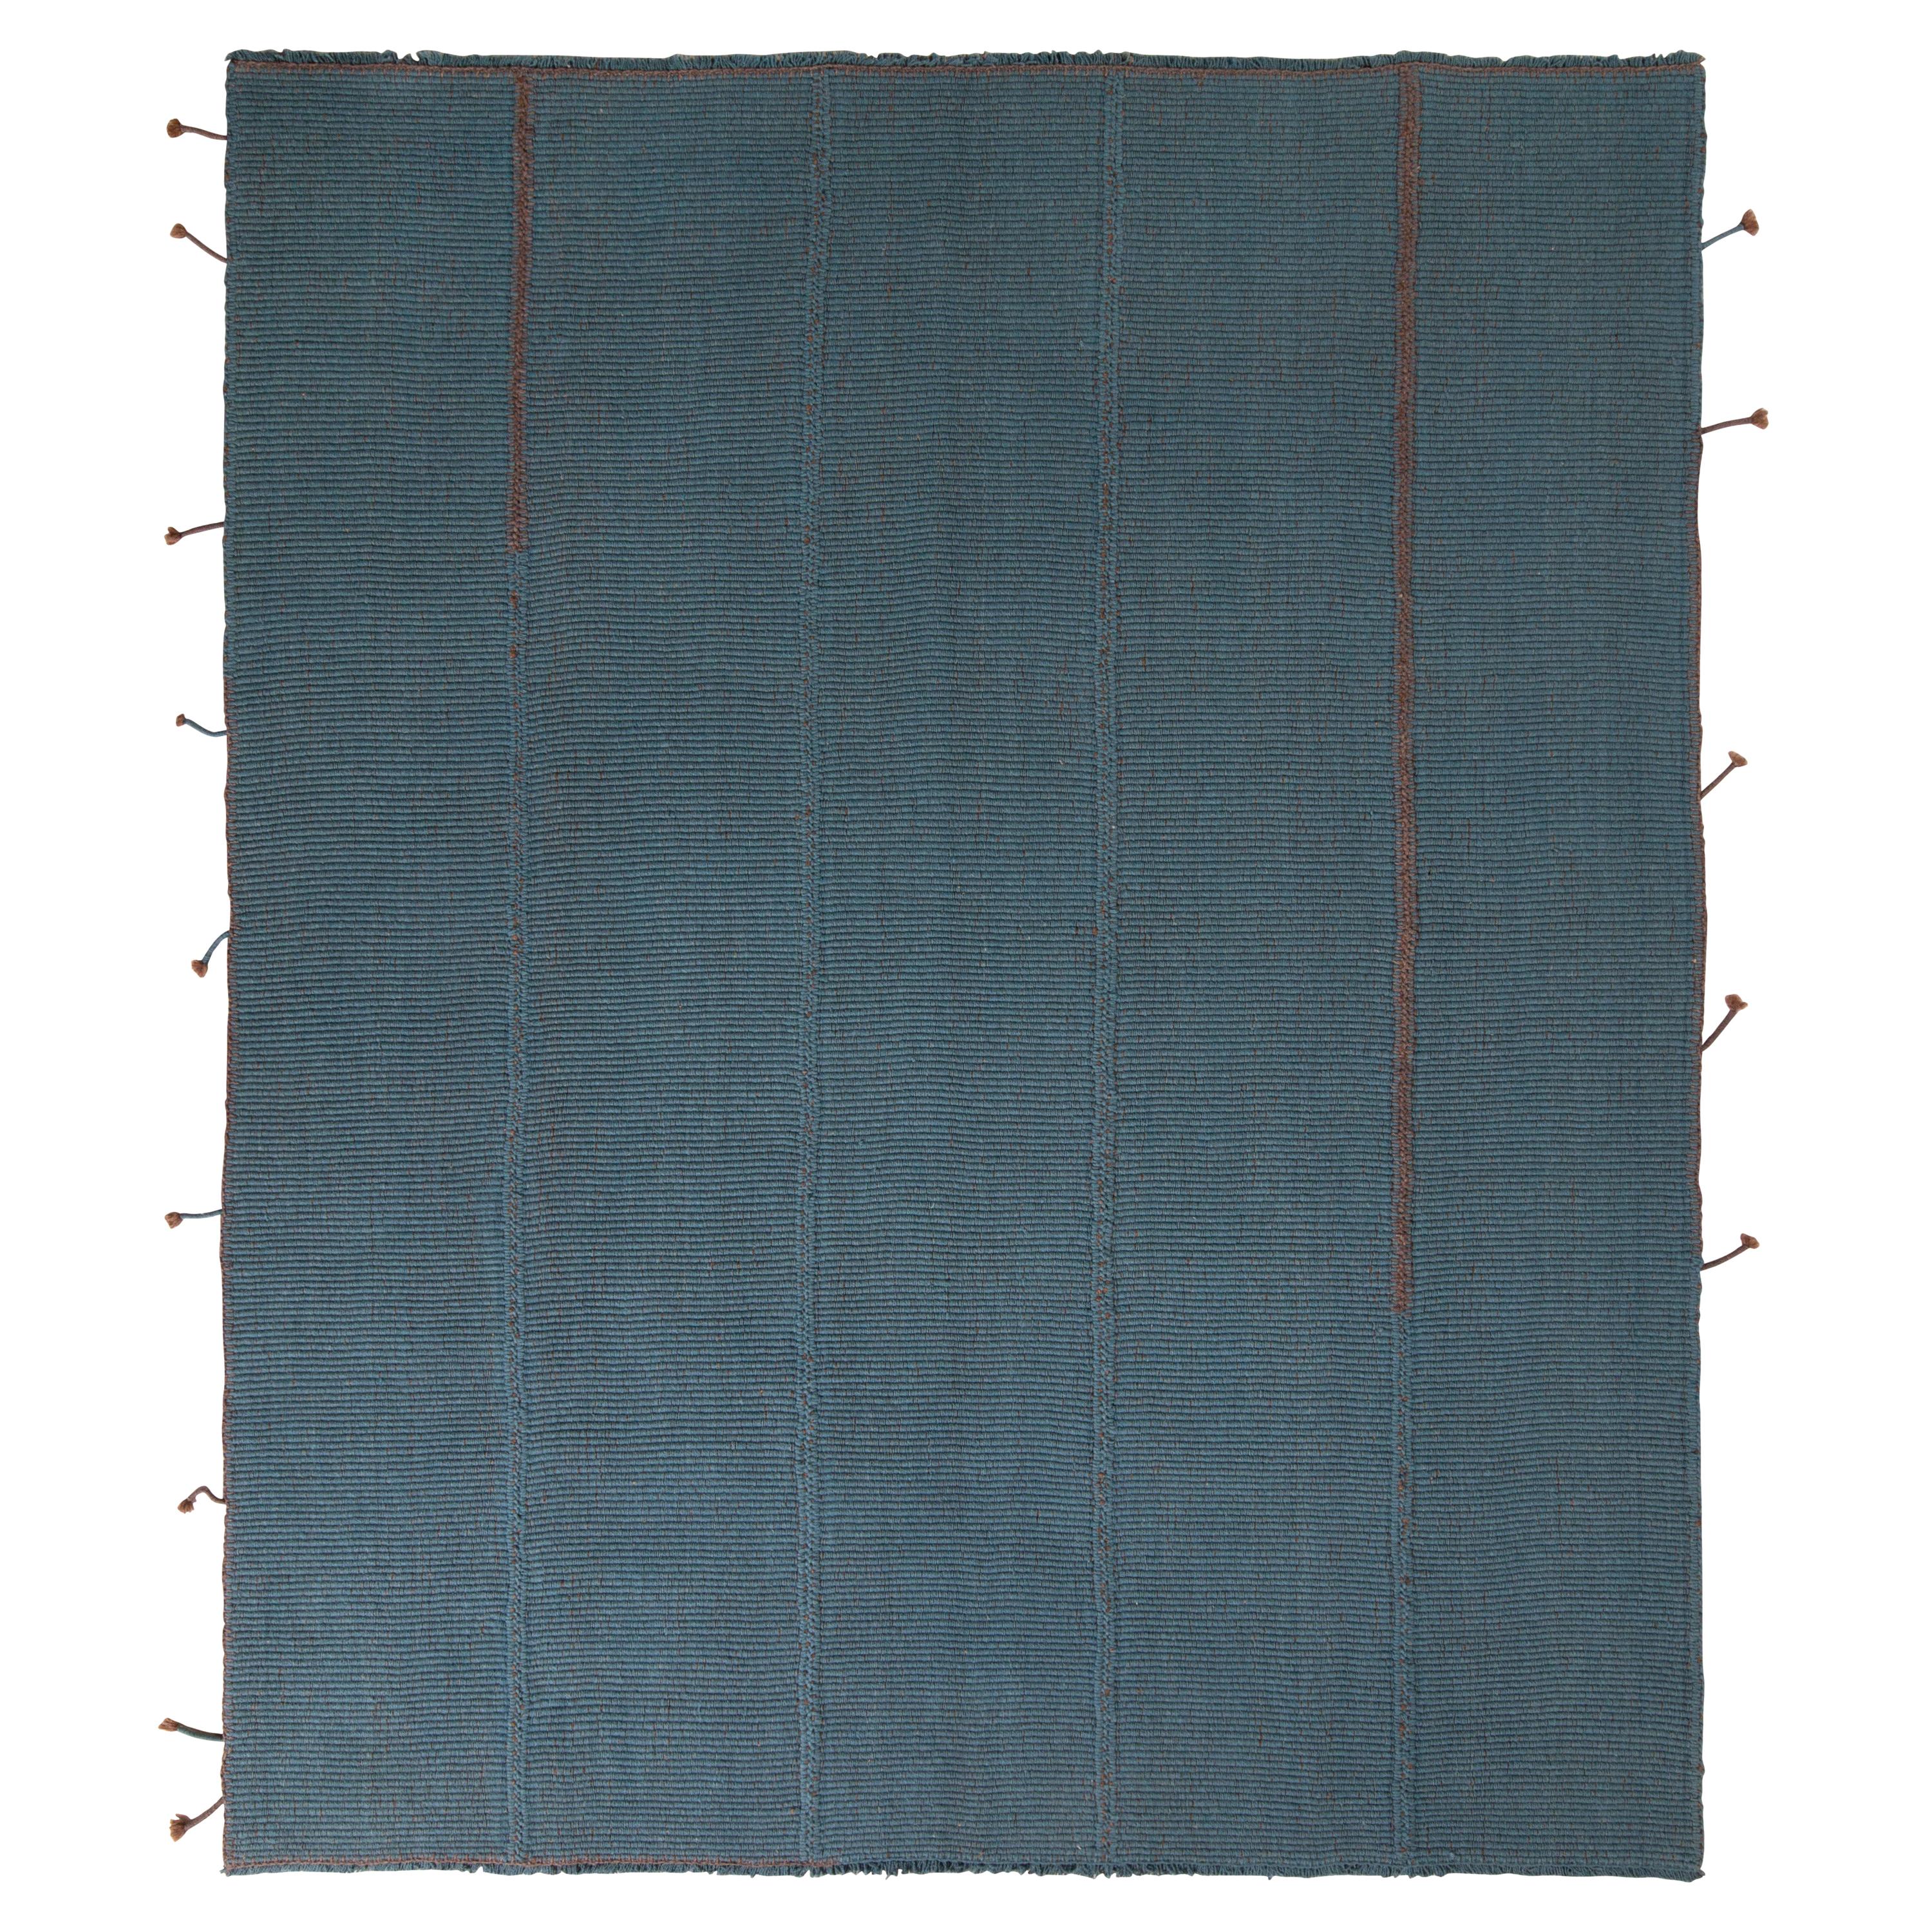 Rug & Kilim’s Custom Kilim Rug in Blue Brown Solid Striped Pattern